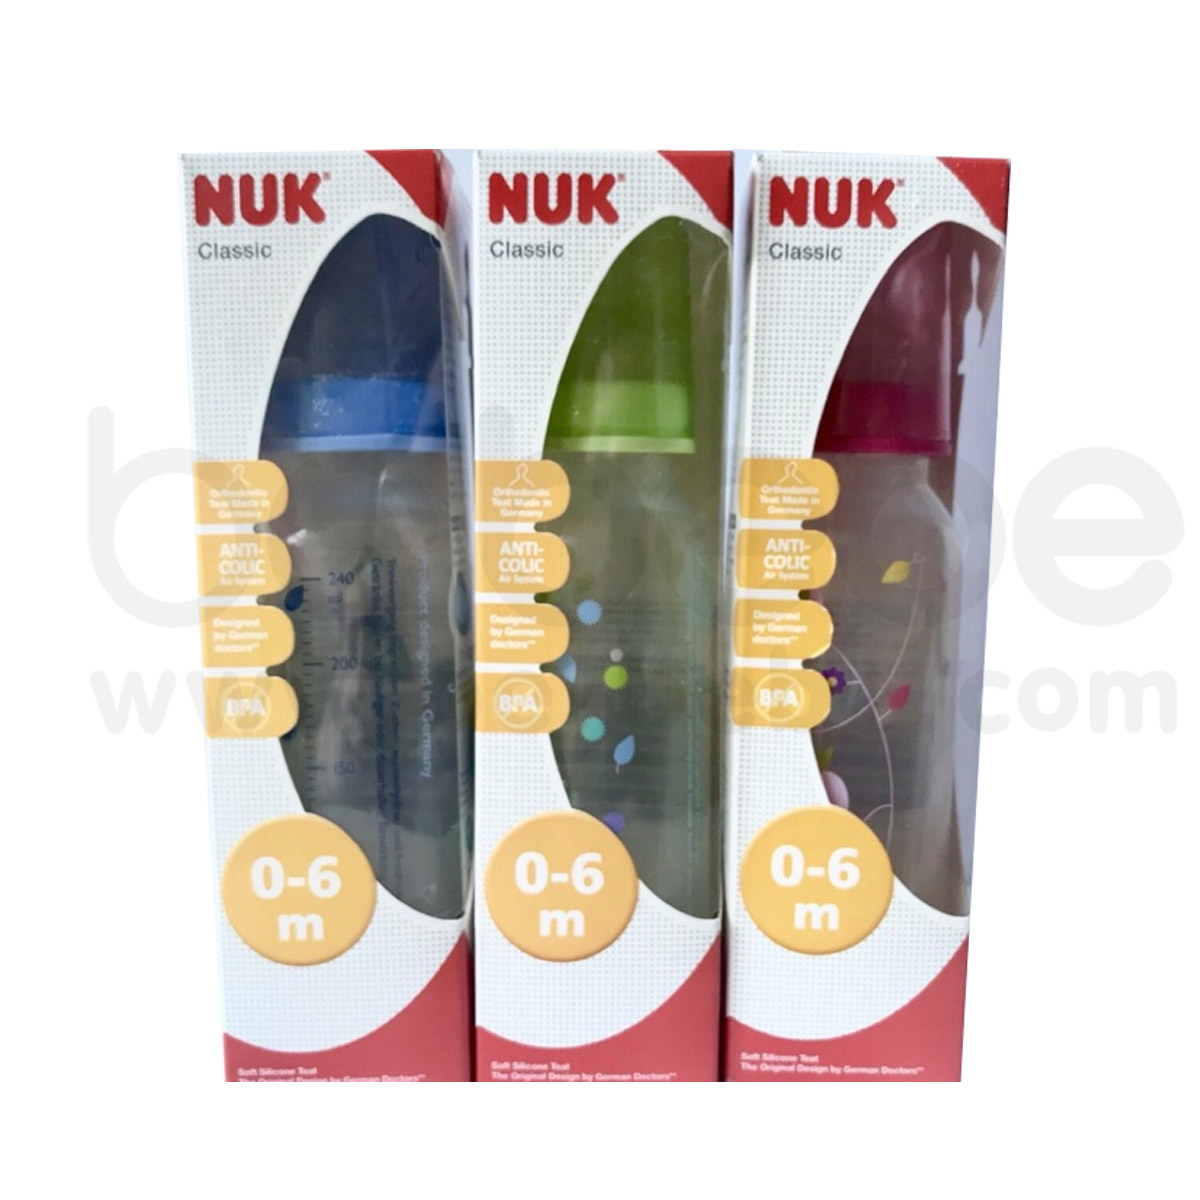 NUK:ขวดนม Classic (0-6 m.) คละสี 240 ml.